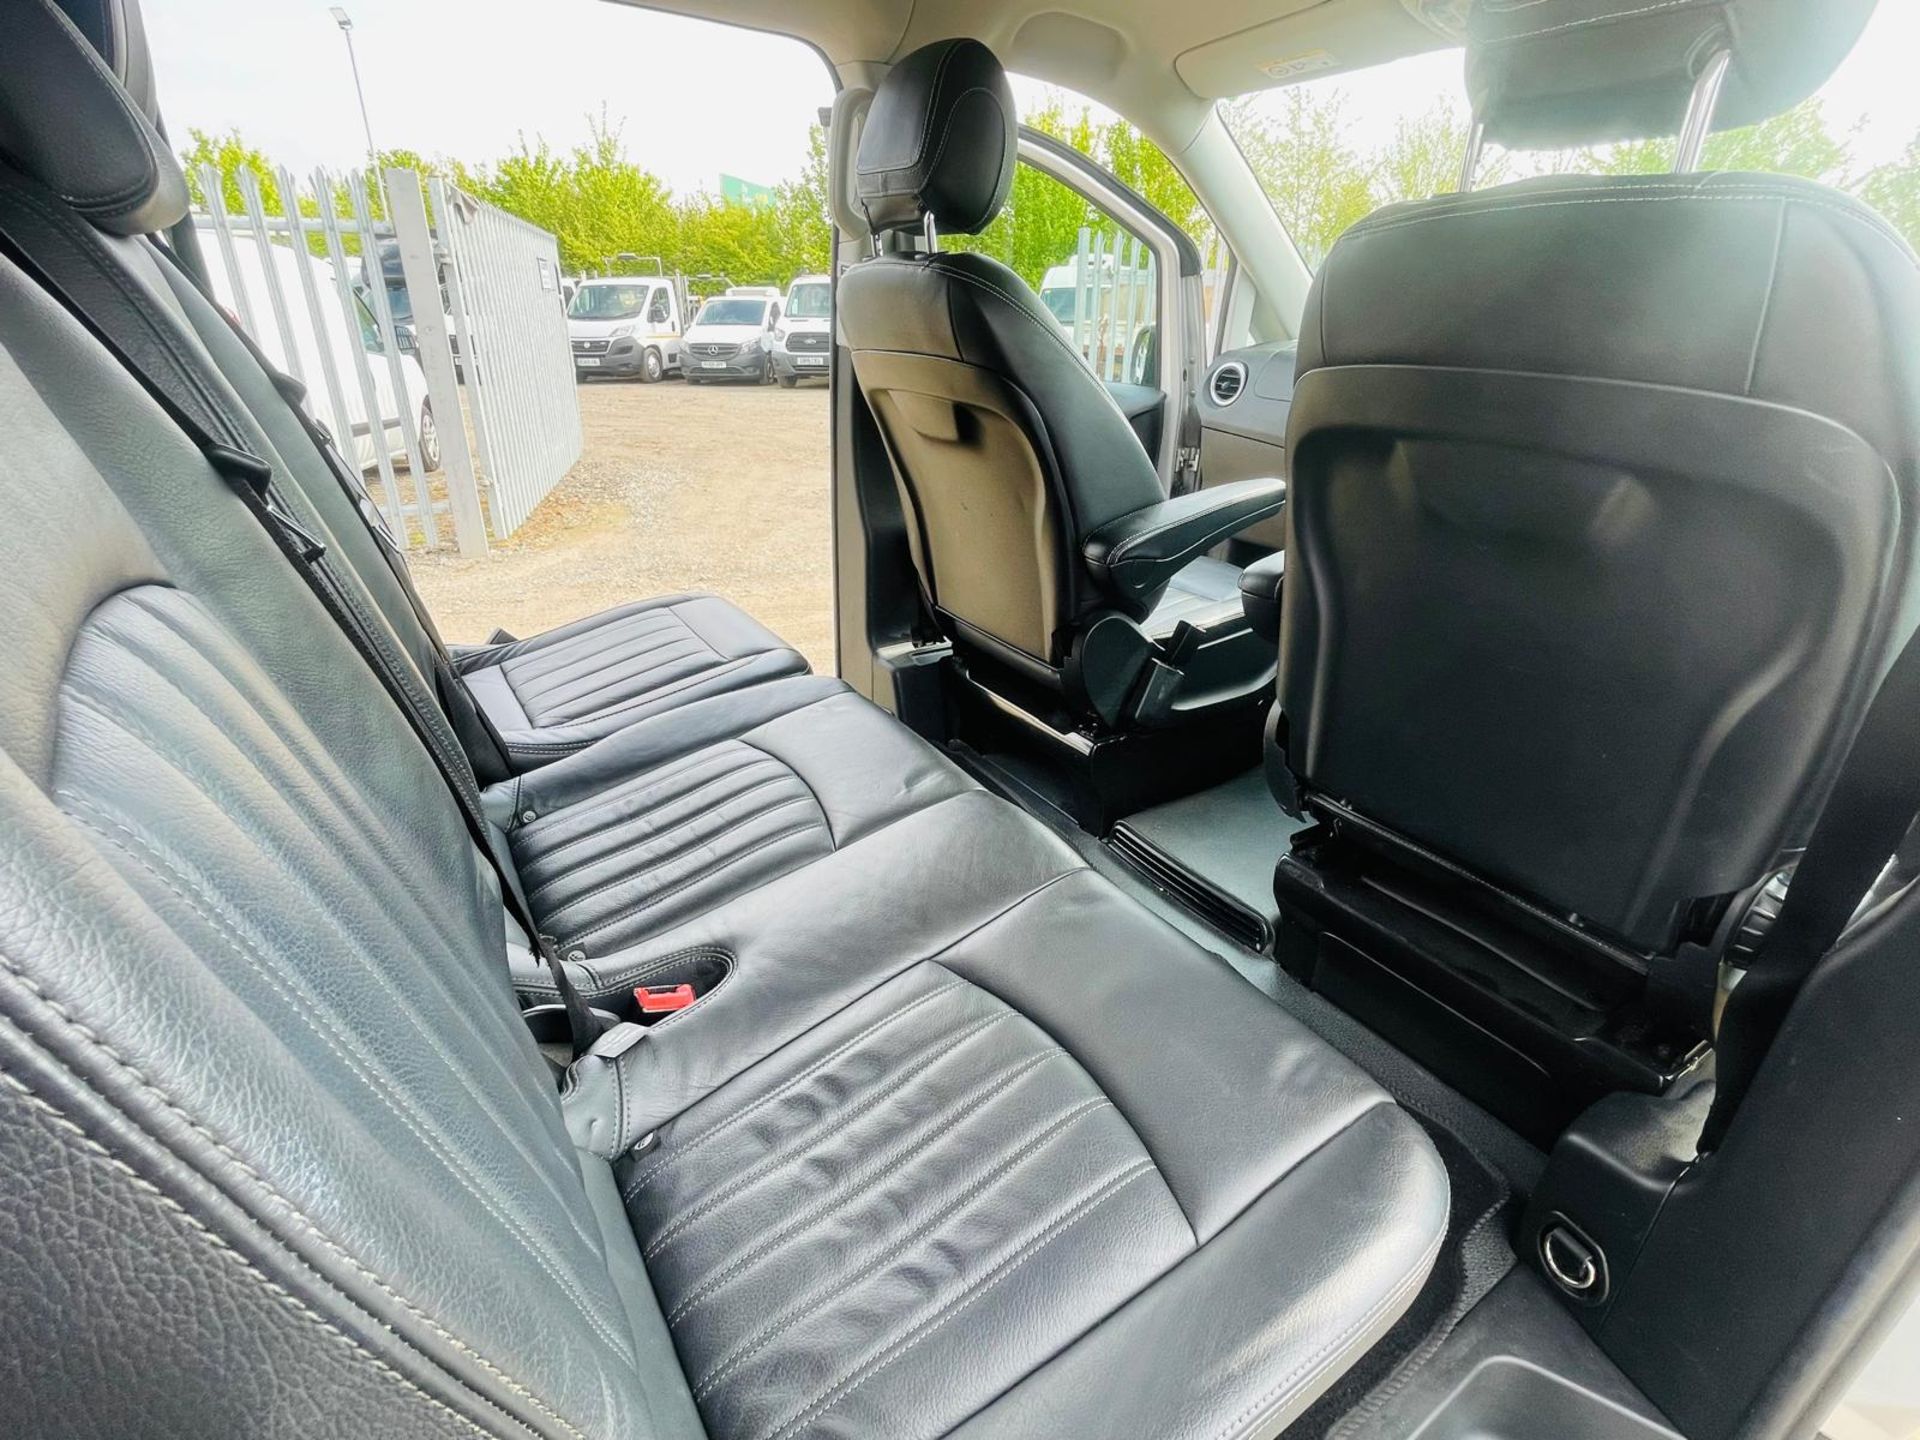 Mercedes-Benz Vito Premium 2.1 119 CDI 7G Tronic Crew Cab LWB Automatic 2019'19 Reg'- Alloy Wheels - Image 29 of 31